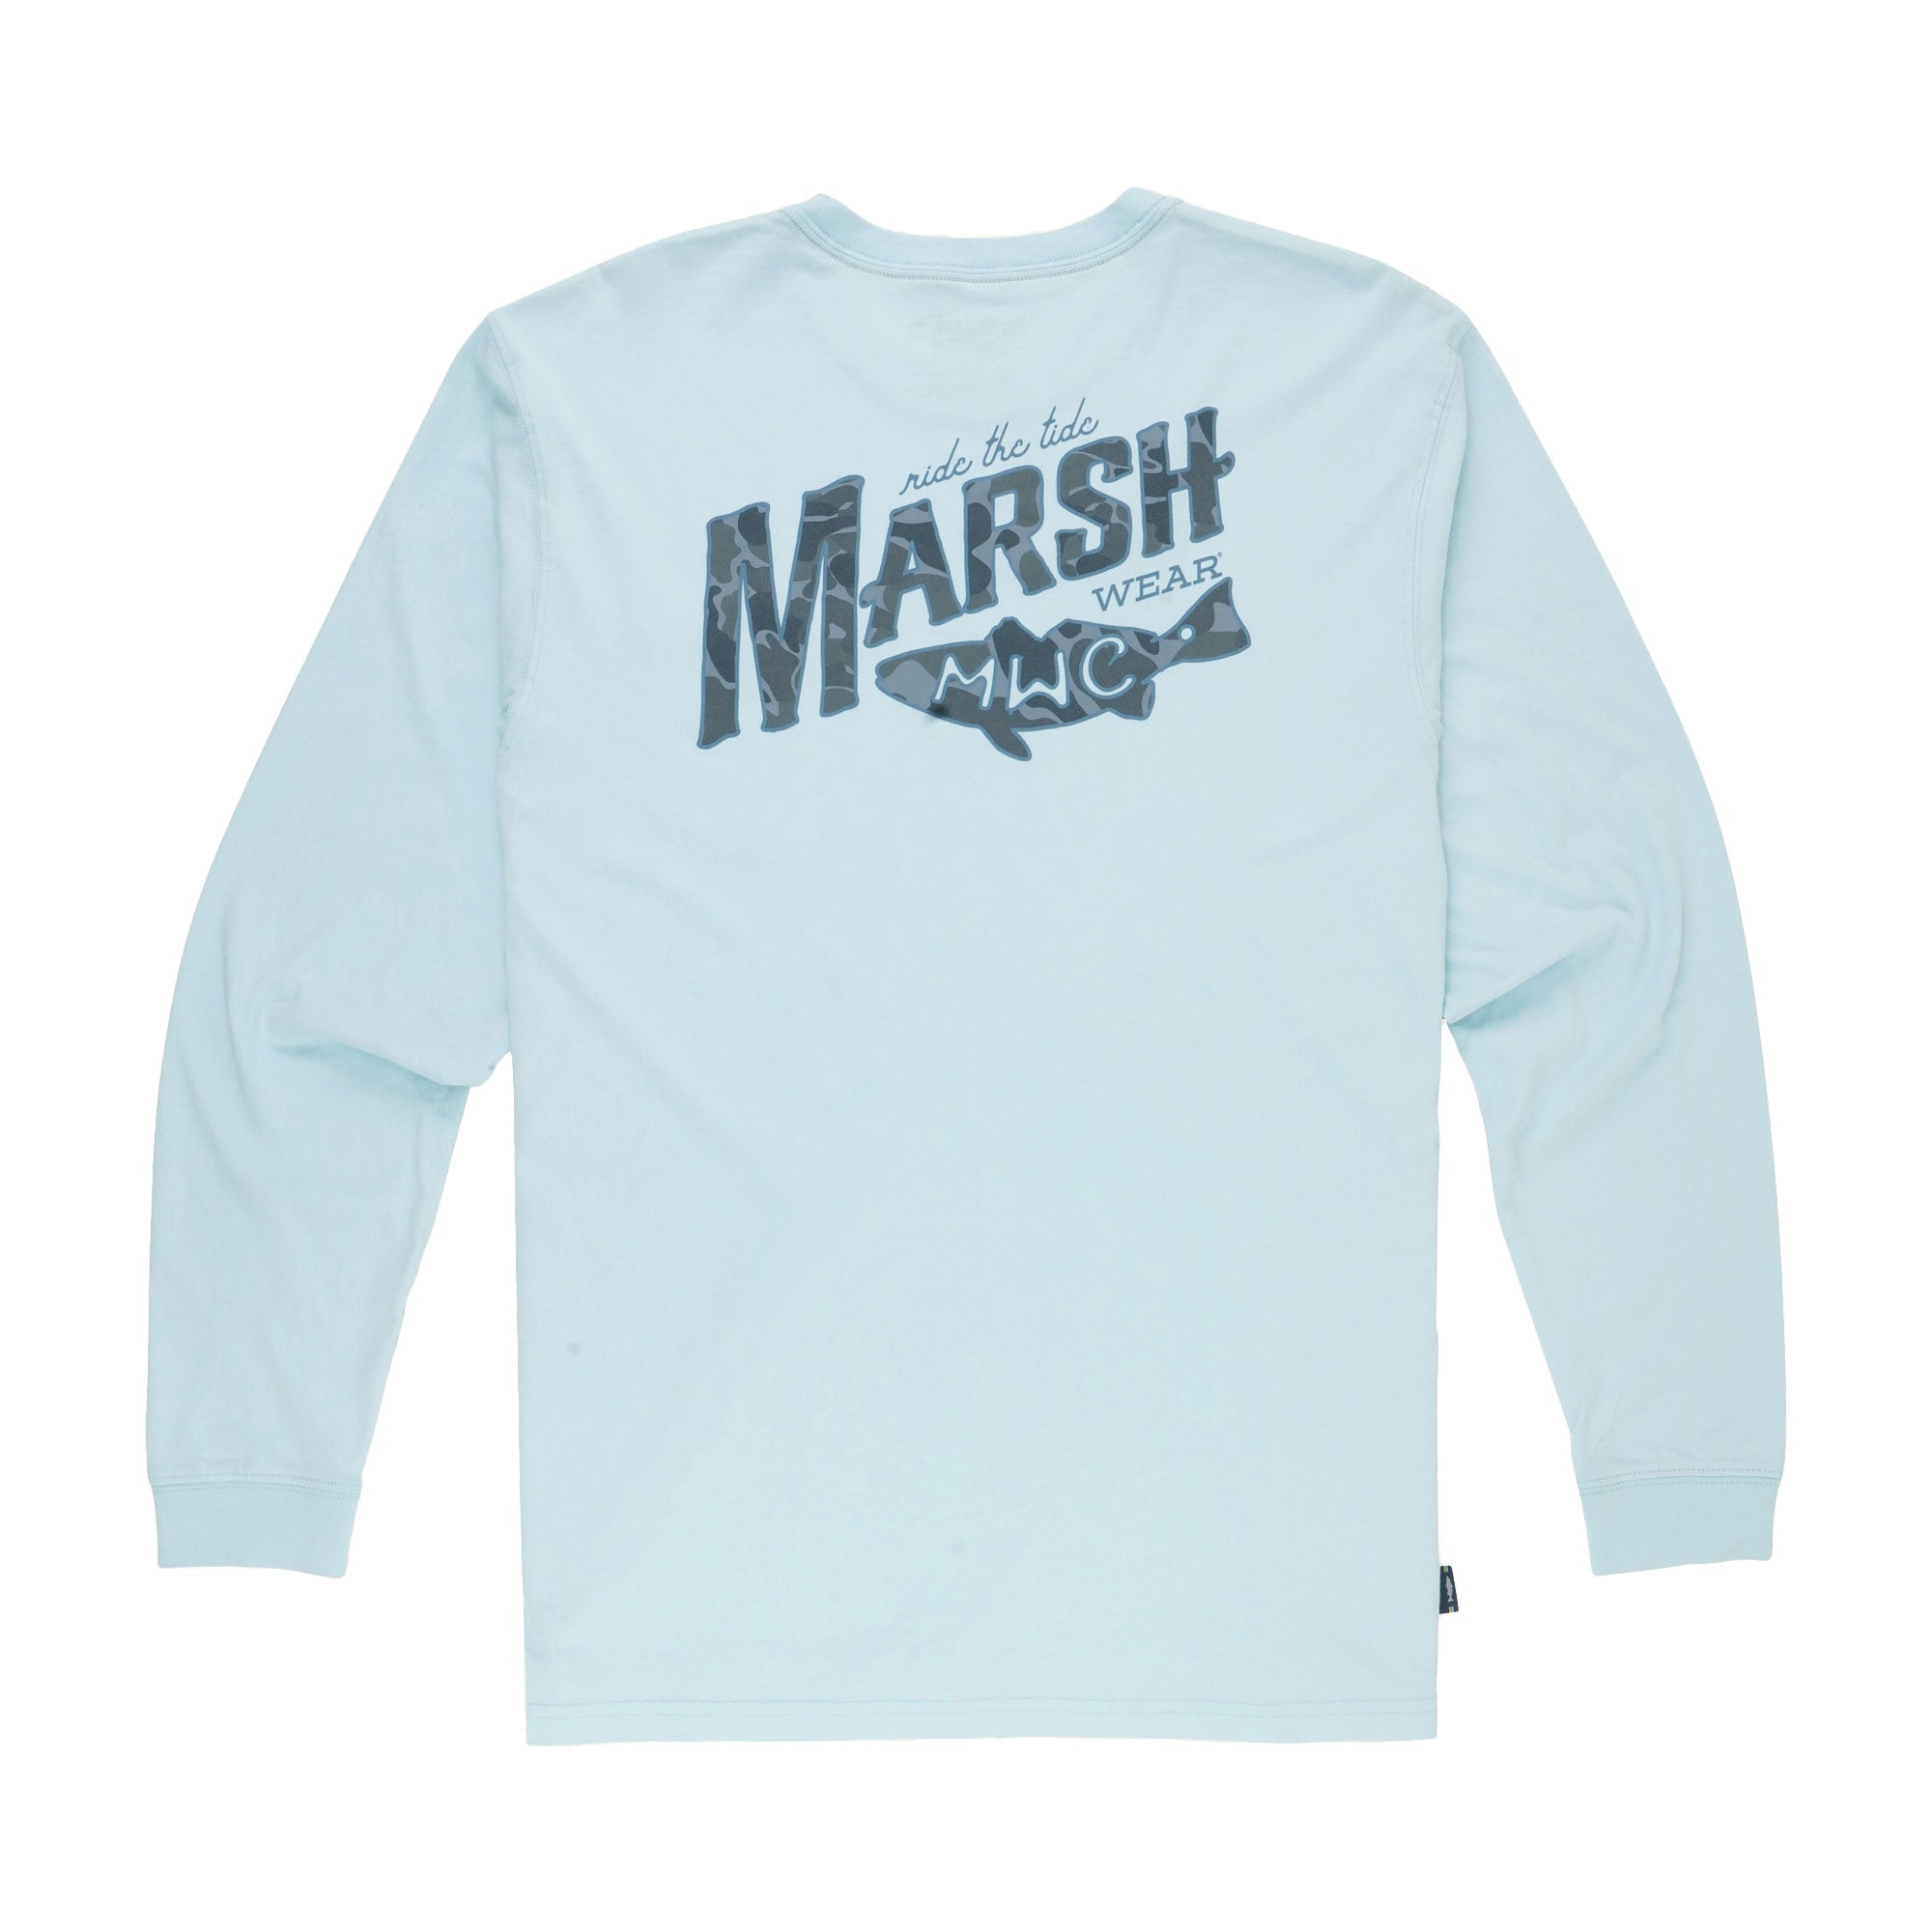 Marsh Wear Sunrise Marsh Long Sleeve T-Shirt